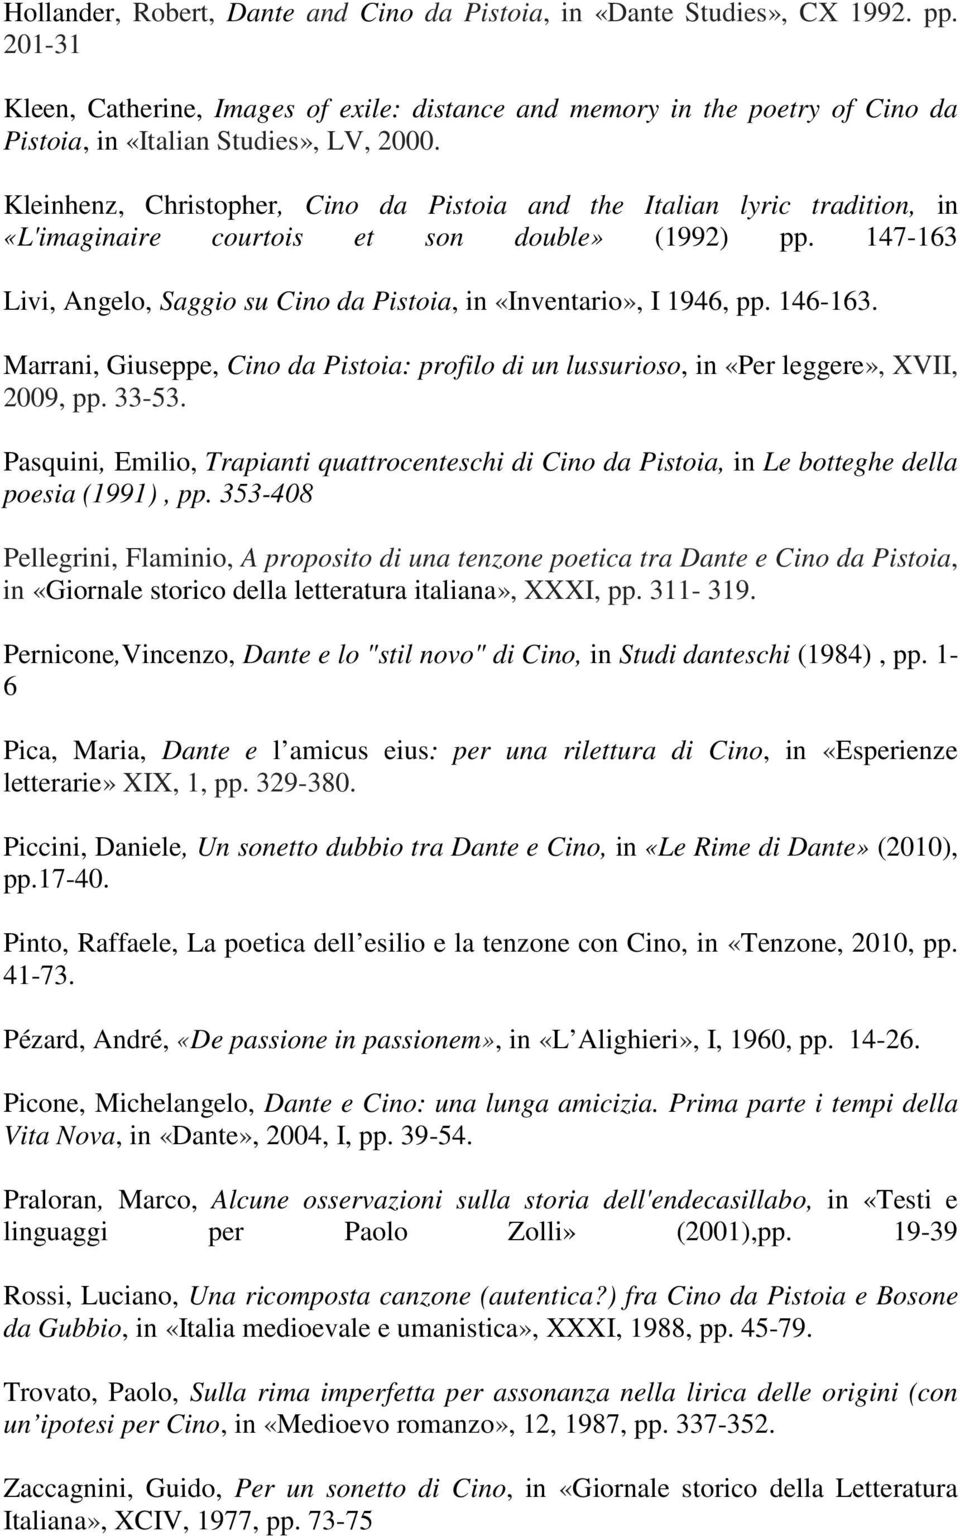 Kleinhenz, Christopher, Cino da Pistoia and the Italian lyric tradition, in «L'imaginaire courtois et son double» (1992) pp.